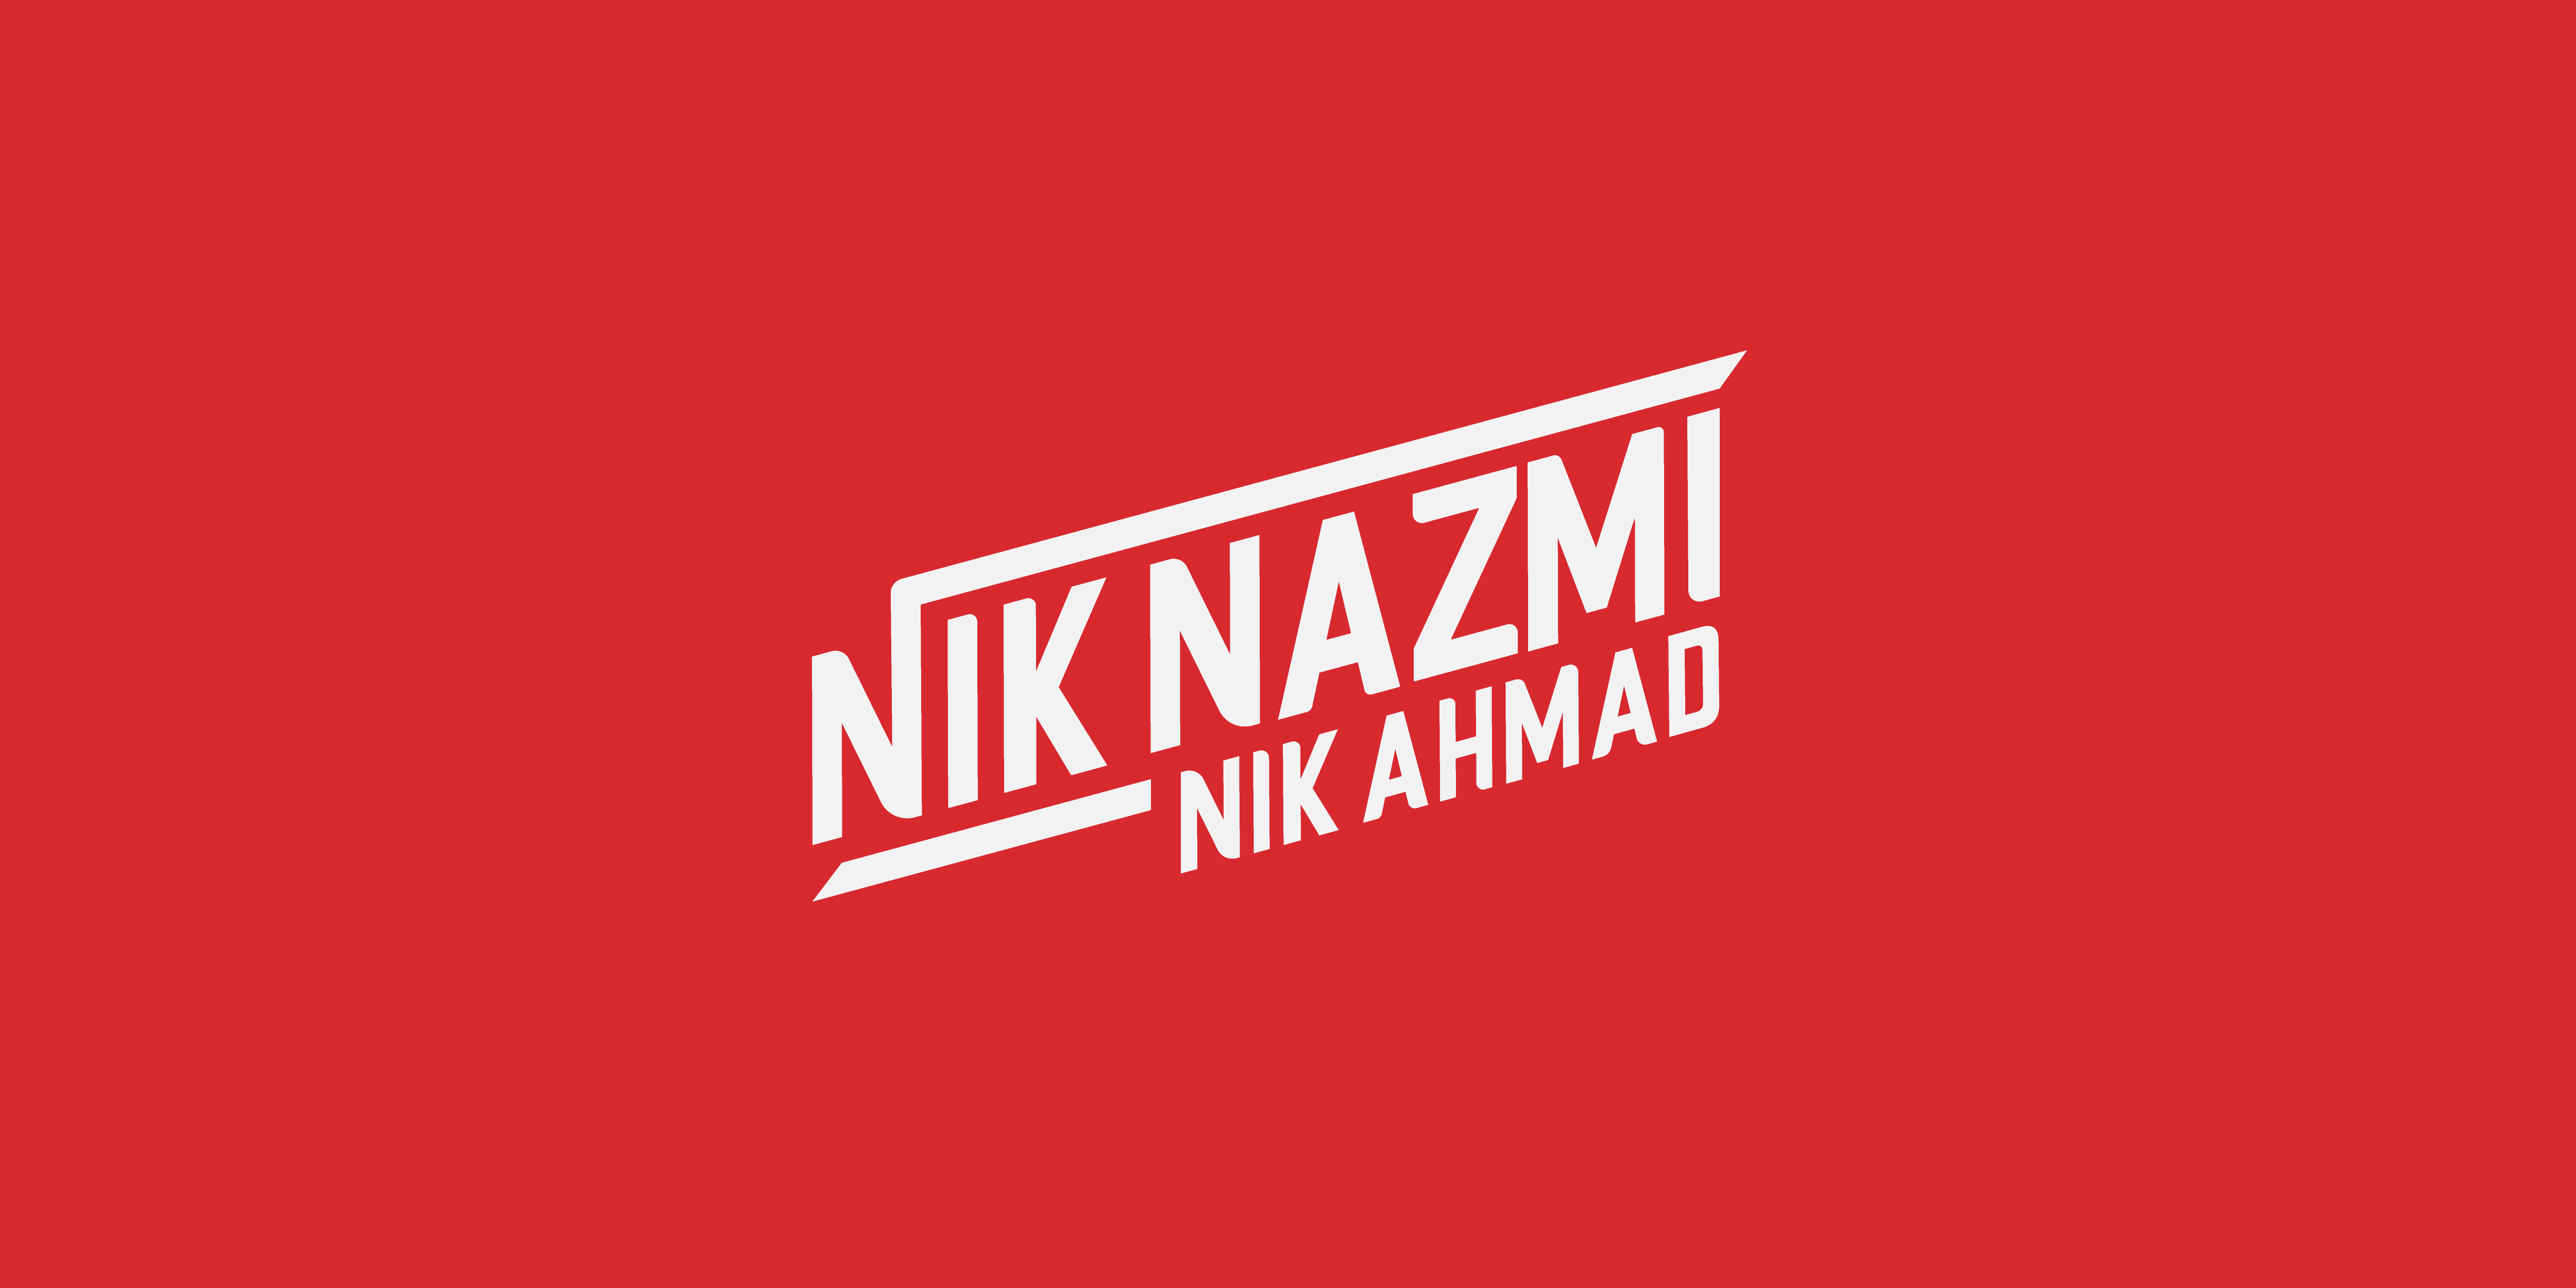 (c) Niknazmi.com